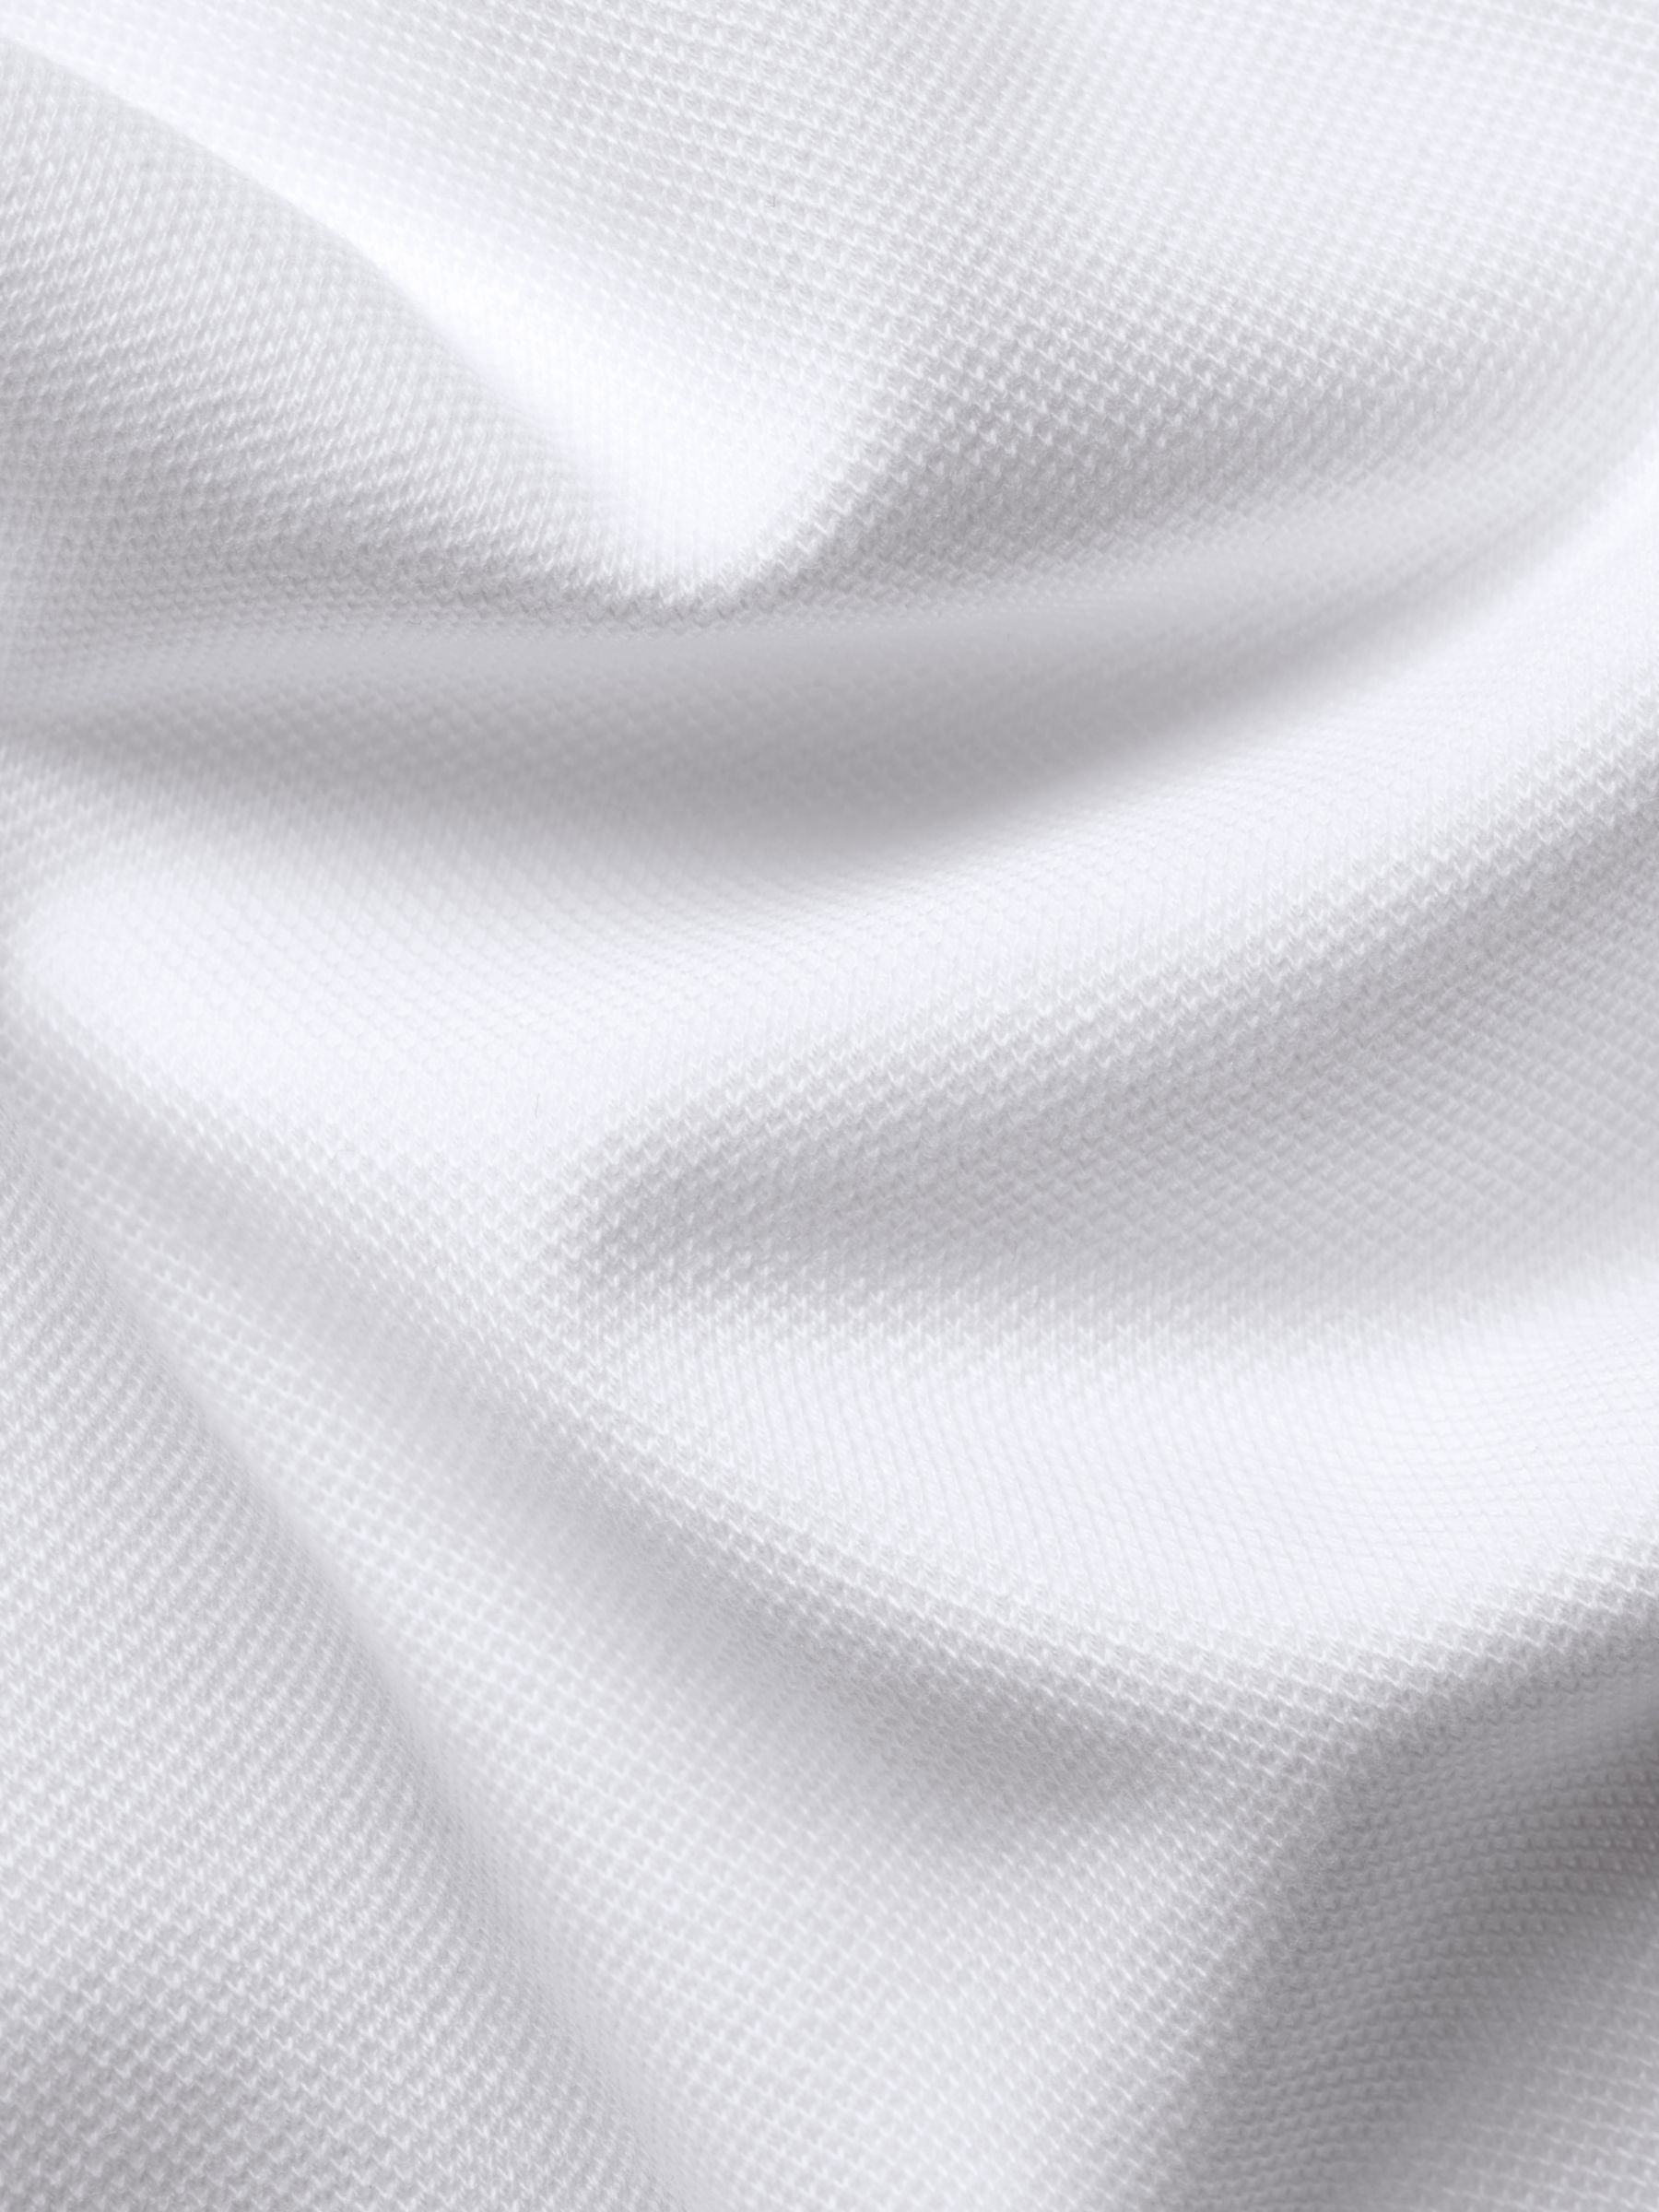 Charles Tyrwhitt England Rugby Long Sleeve Pique Polo Shirt, White, S